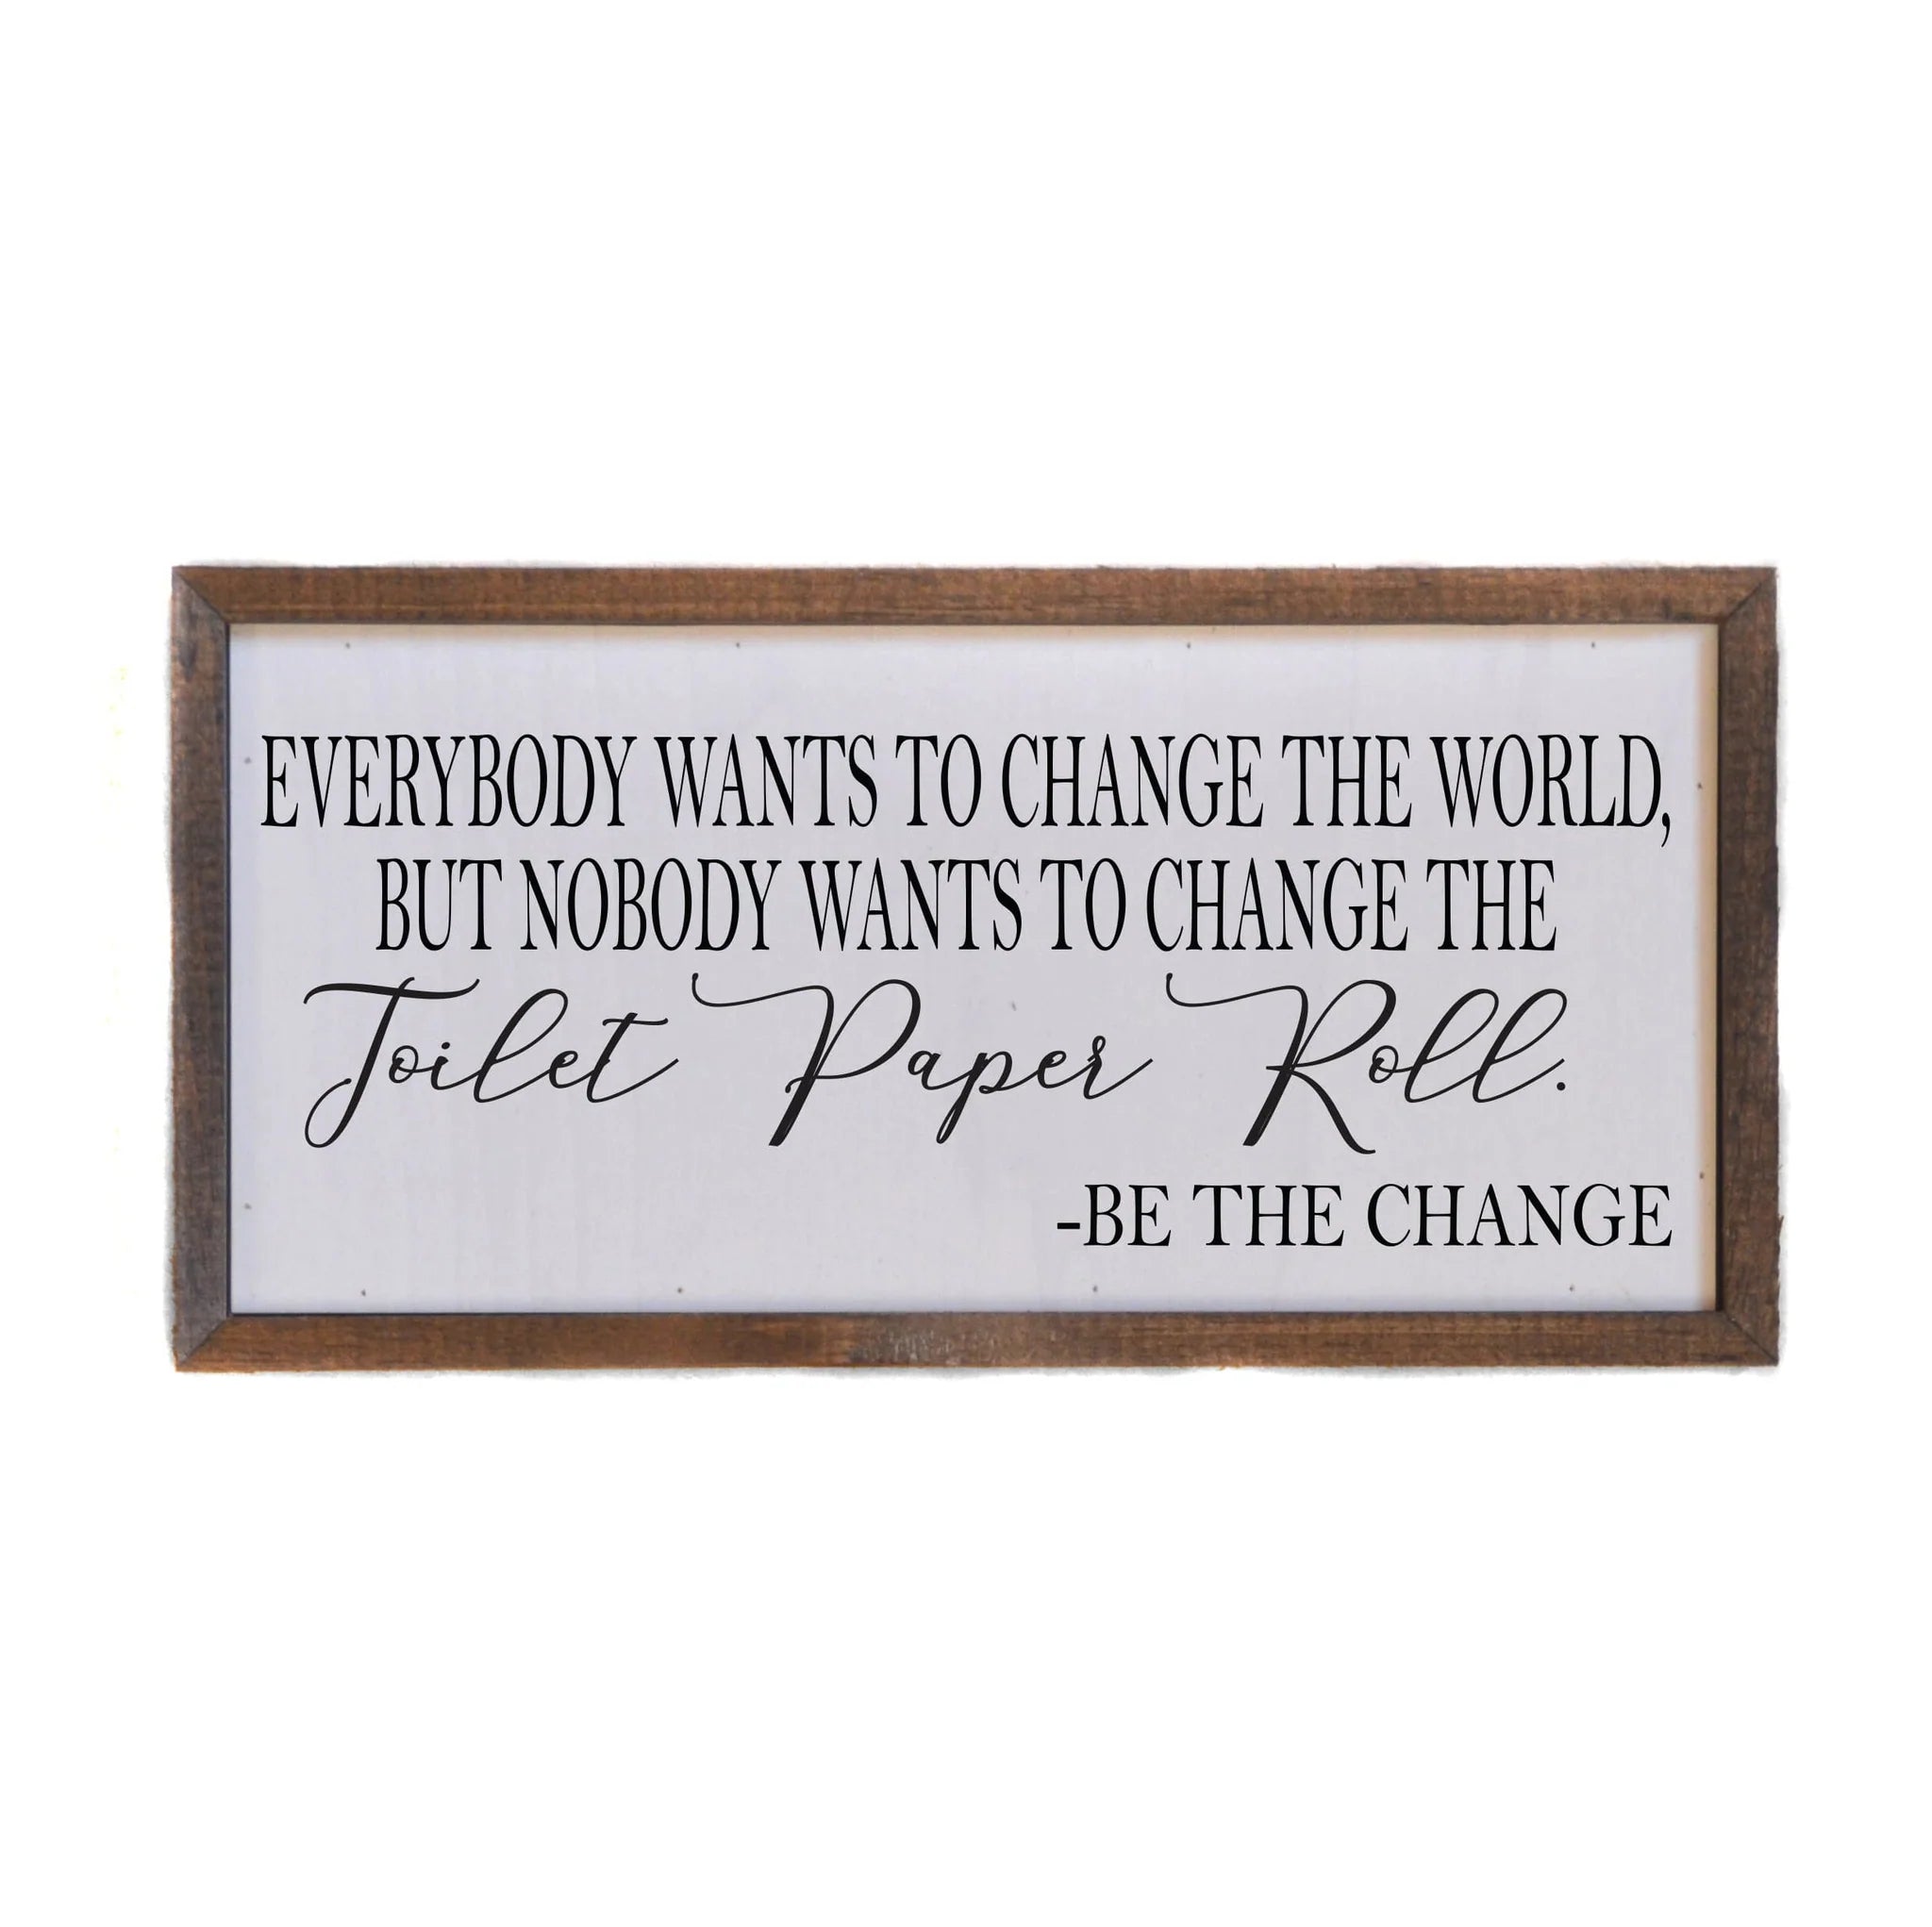 Everybody wants to change